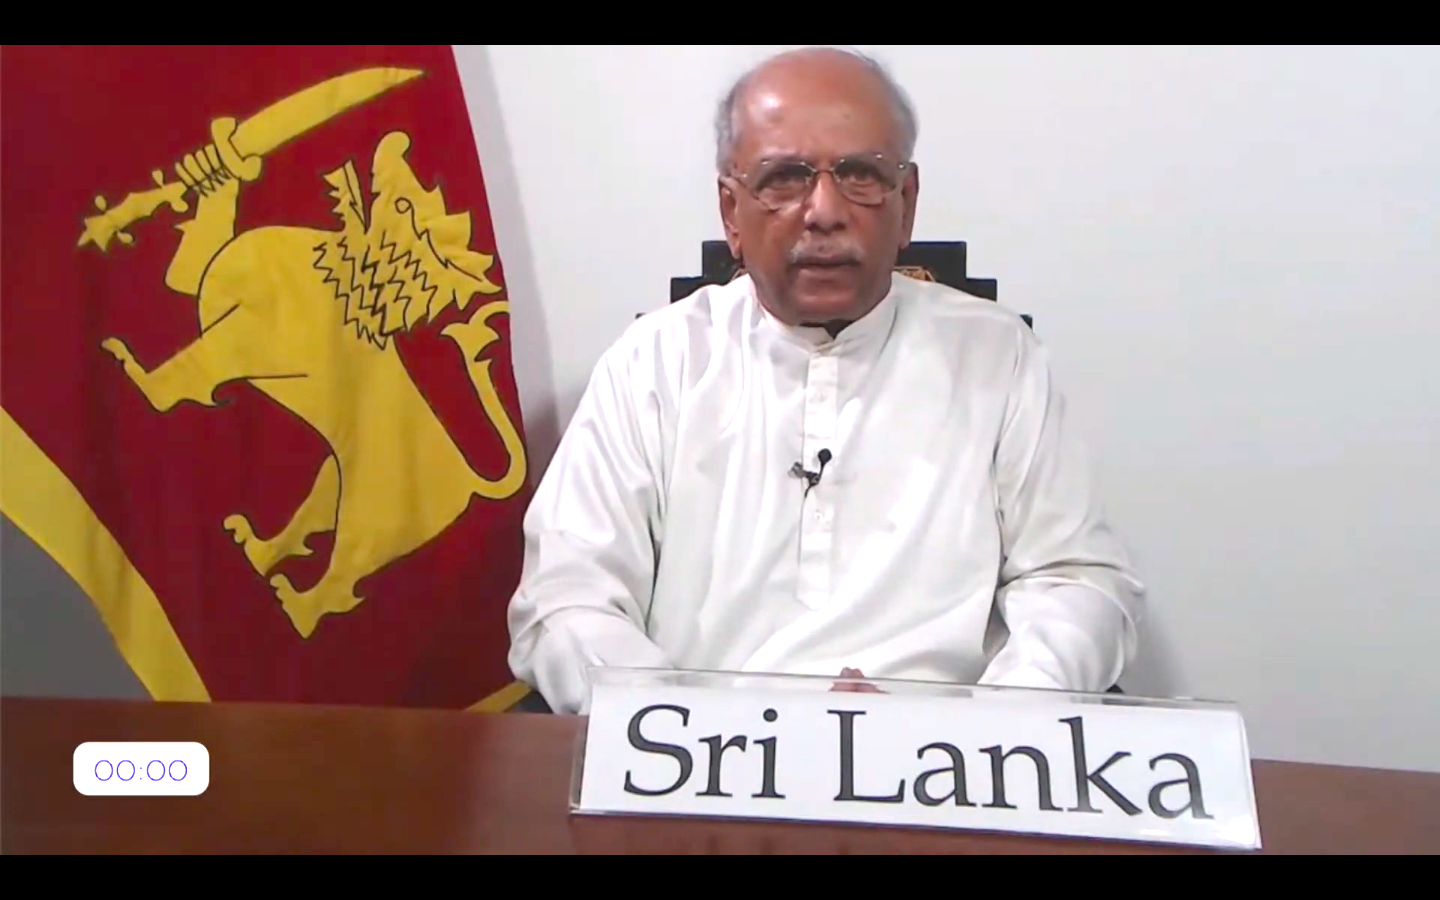 Foreign Minister outlines Sri Lanka's digital responses to COVID -19